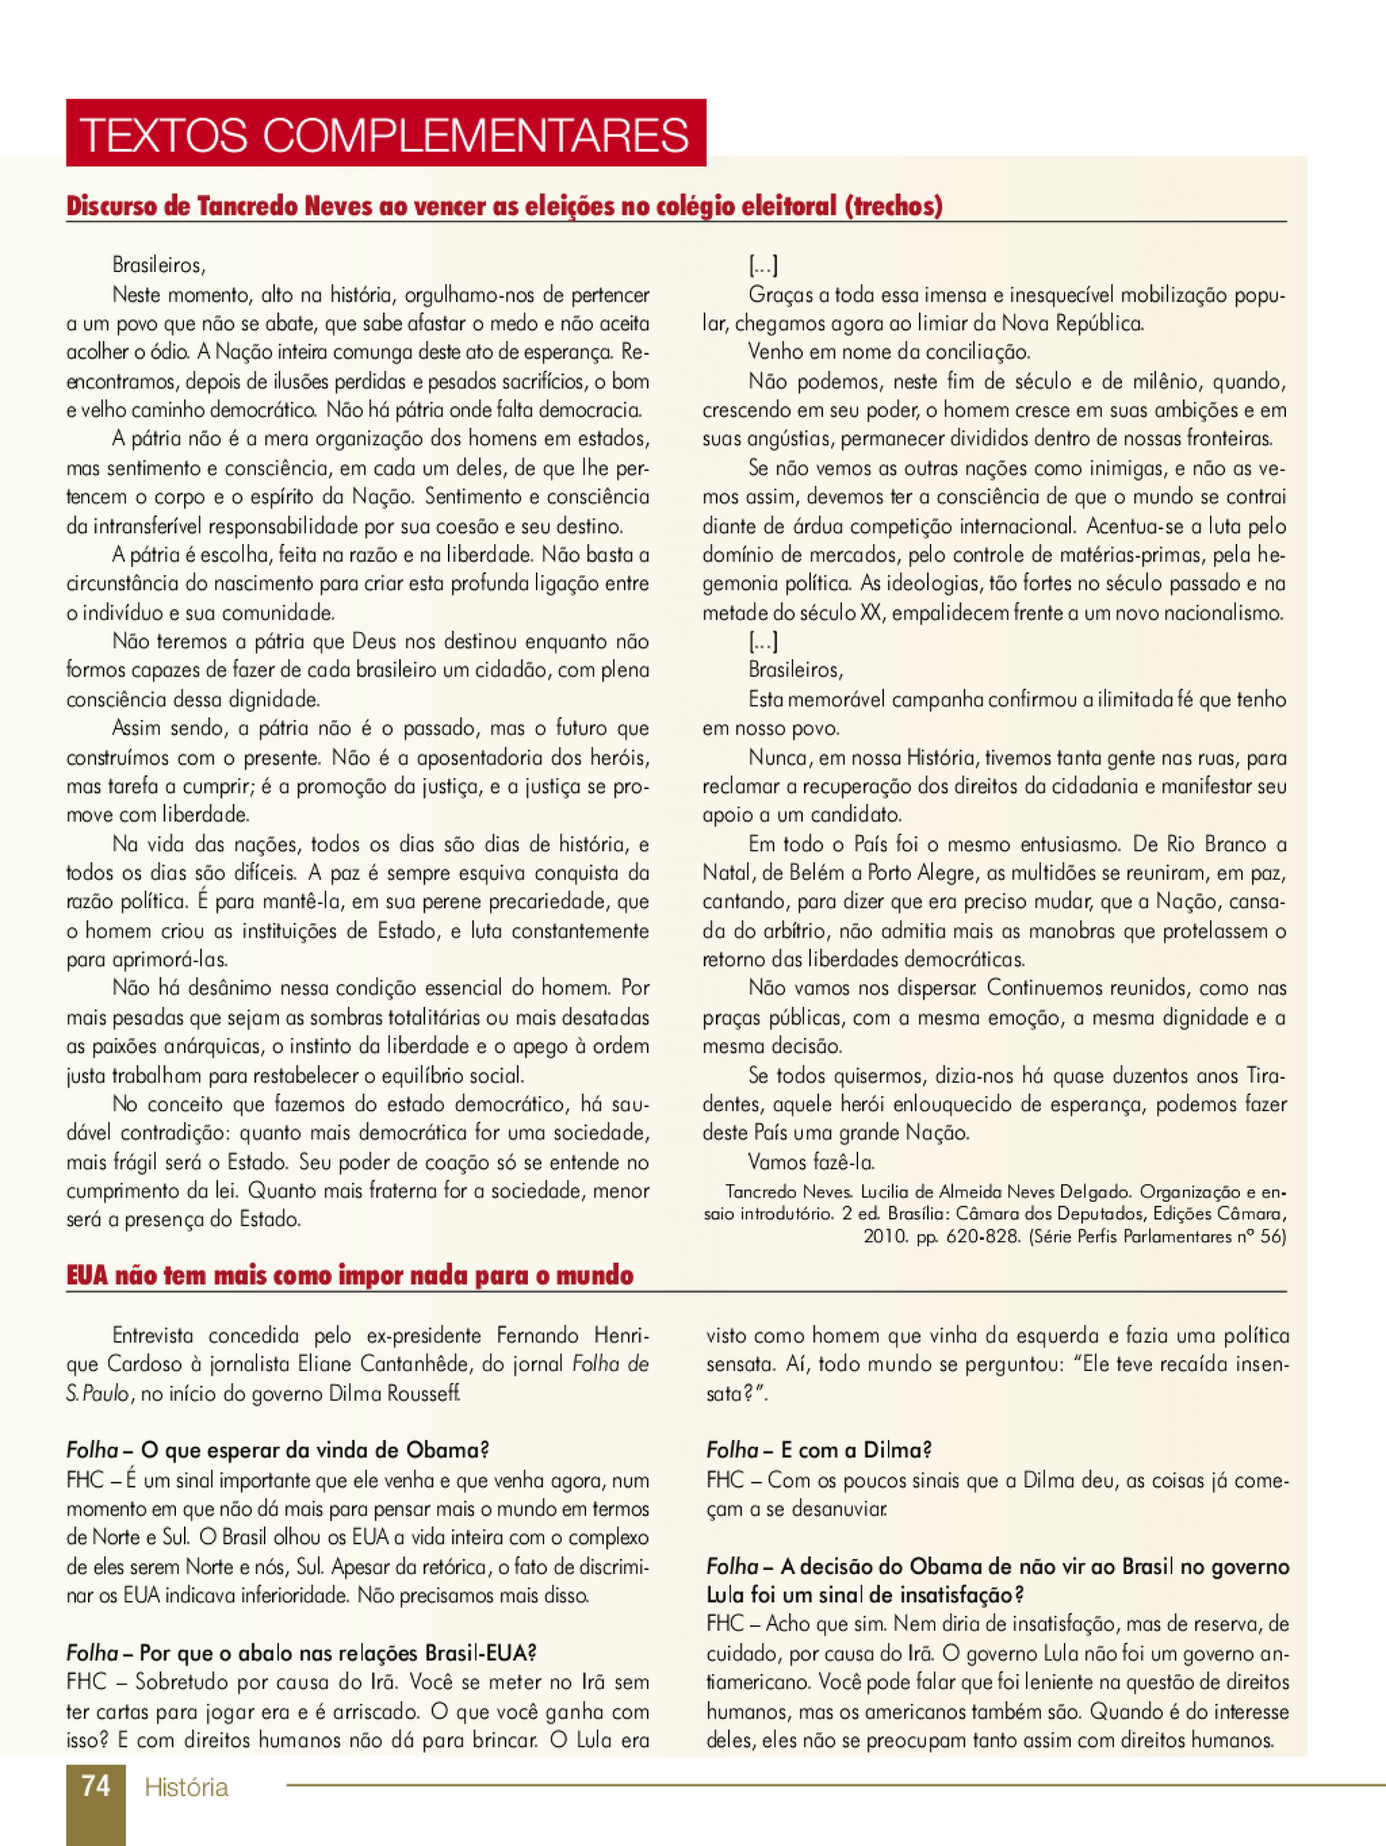 My publications - Plano de Parto - Exemplos 1 e 2 - Page 6 - Created with  Publitas.com